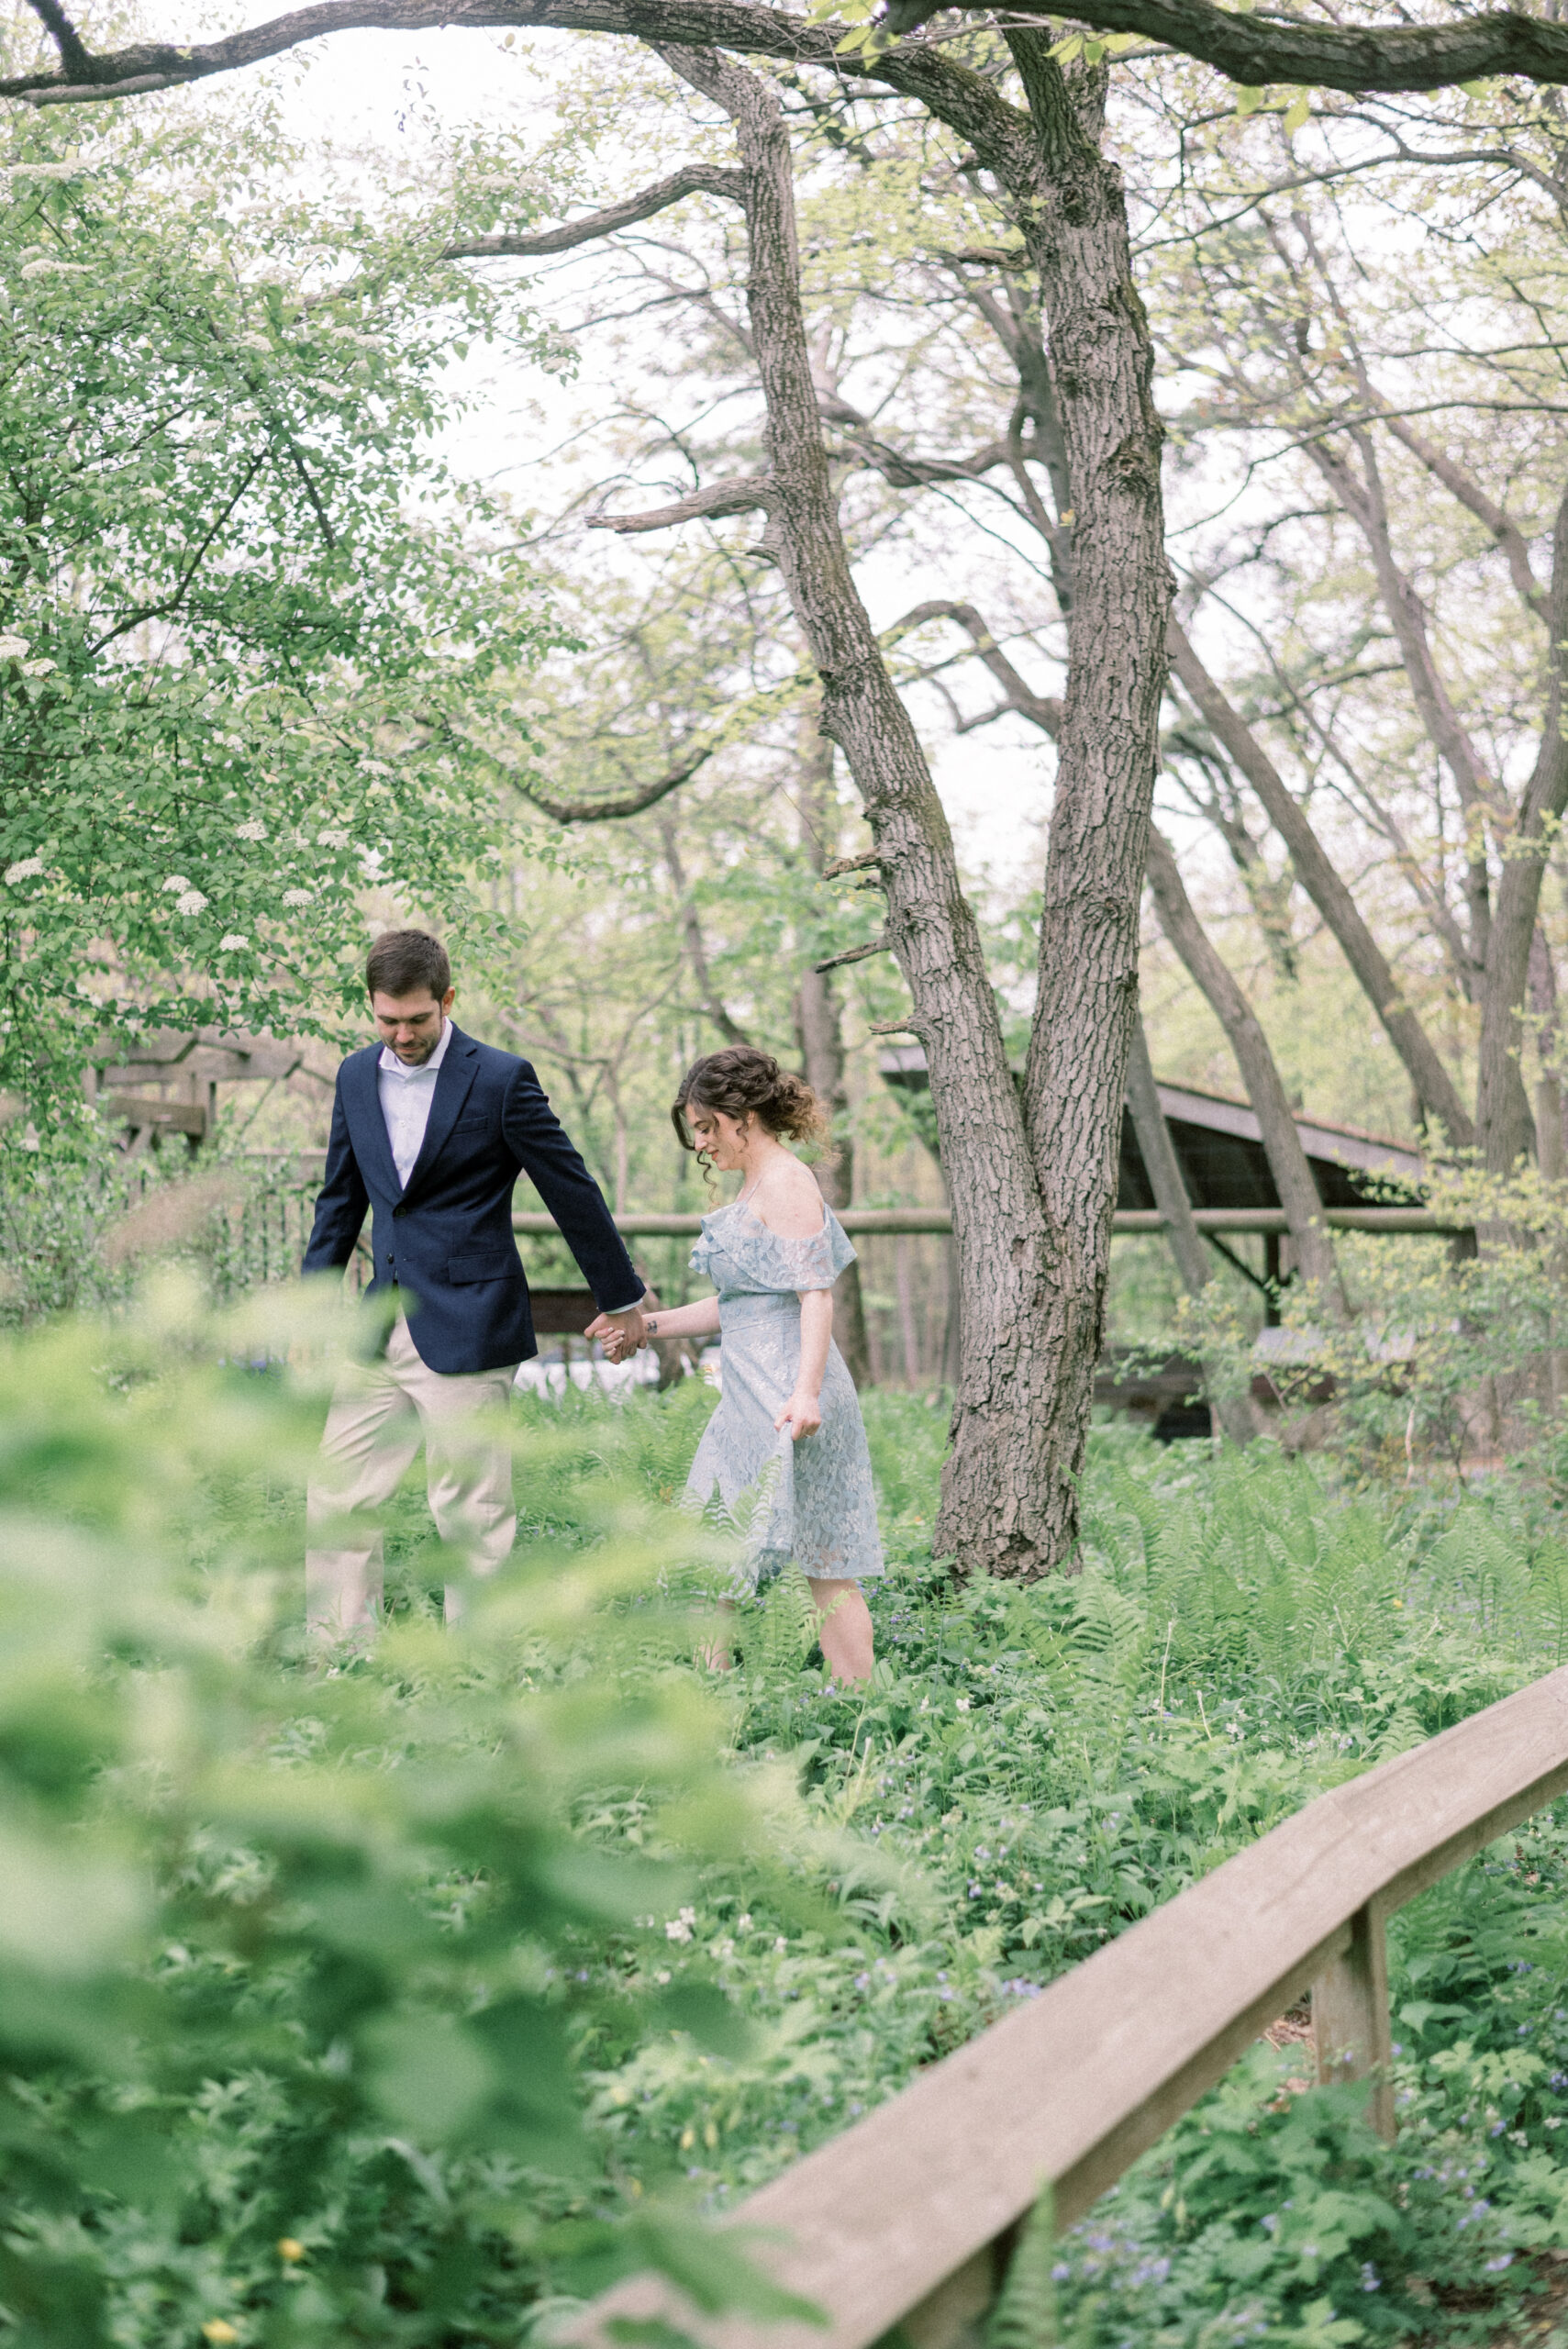 Maryland wedding photographer captures couple walking hand in hand